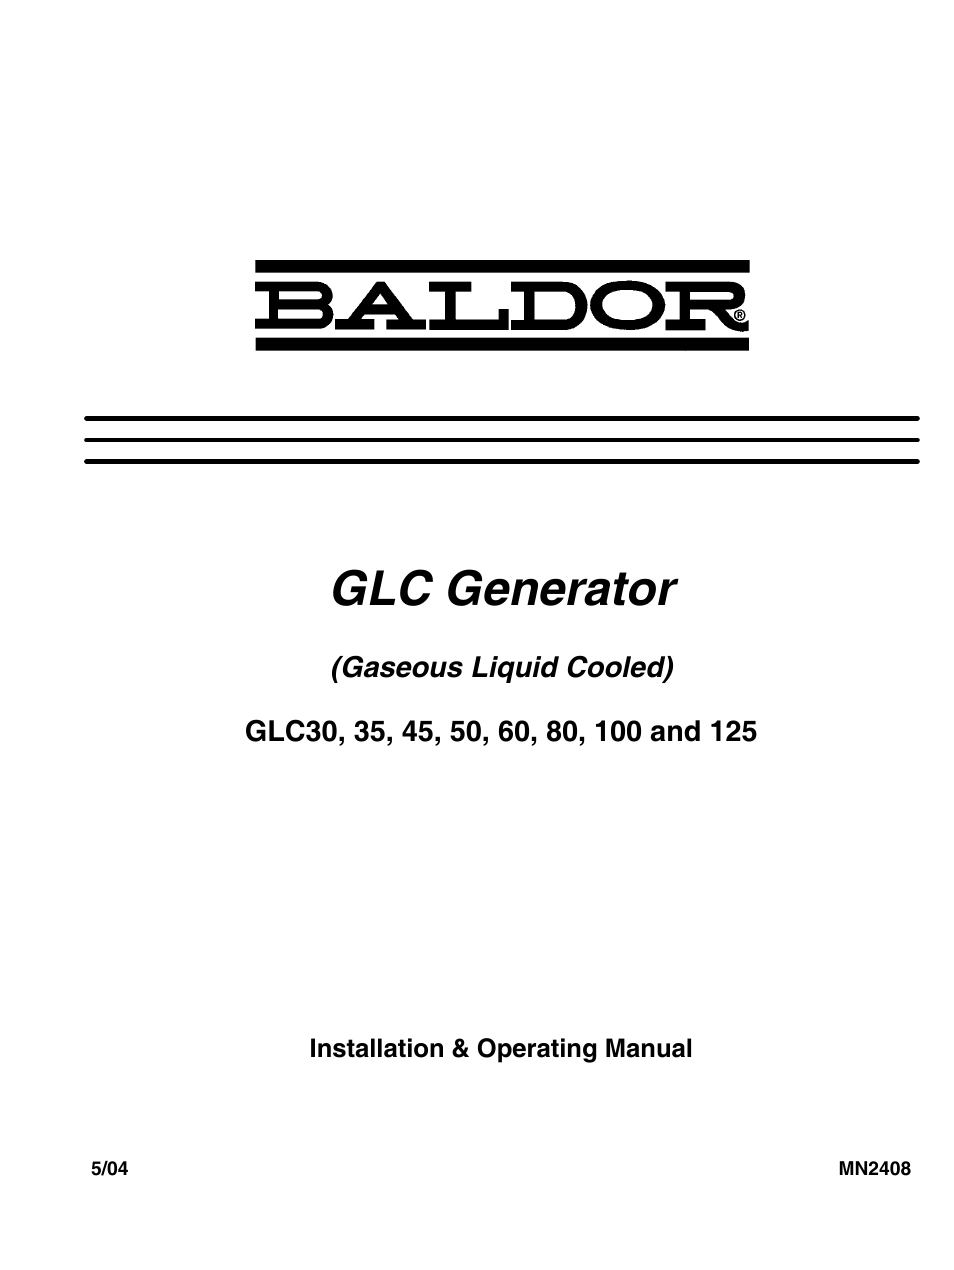 GLC GENERATOR GLC100